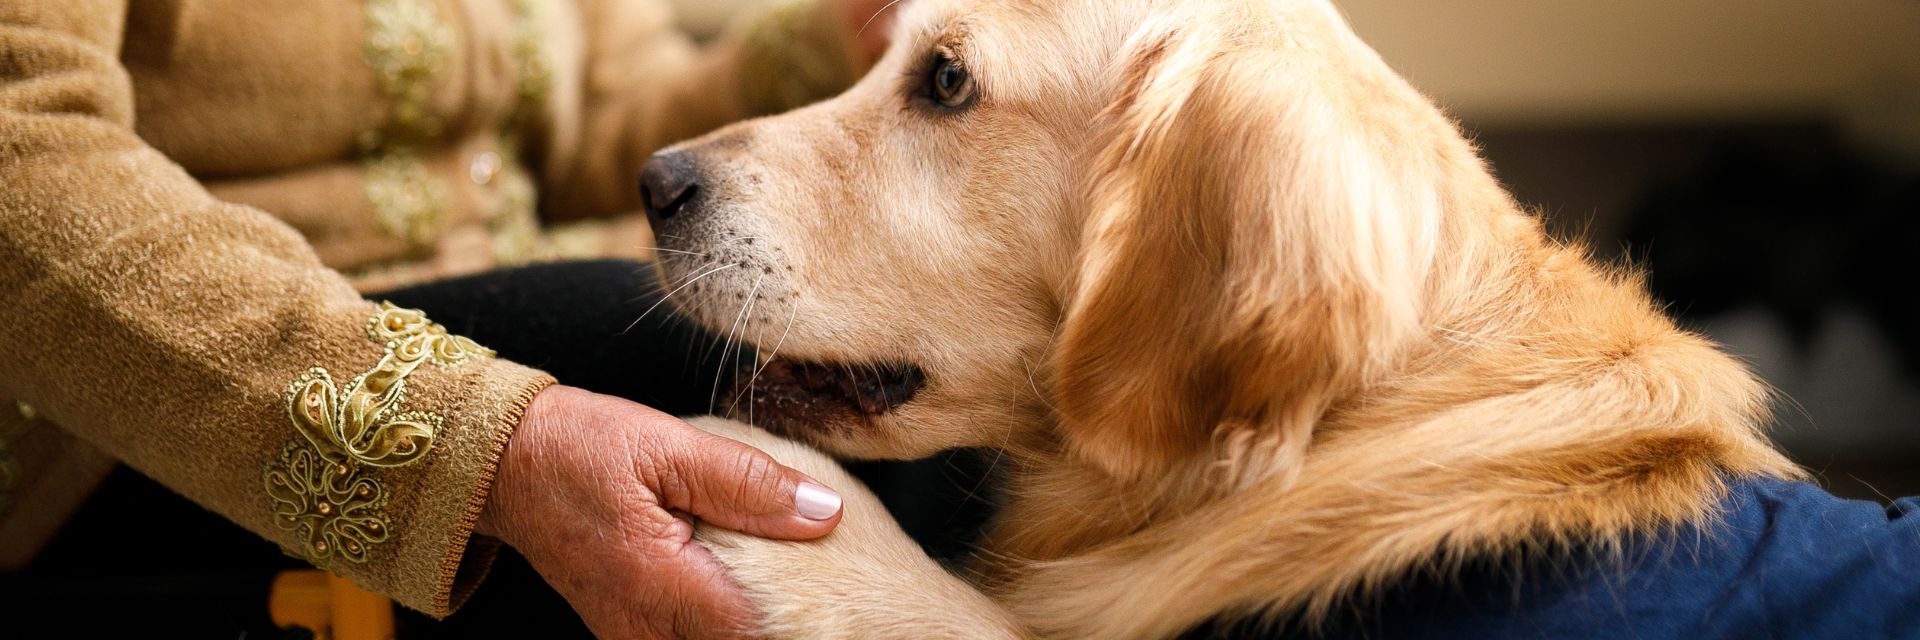 Tiergestütze Therapie Symbolbild Hund